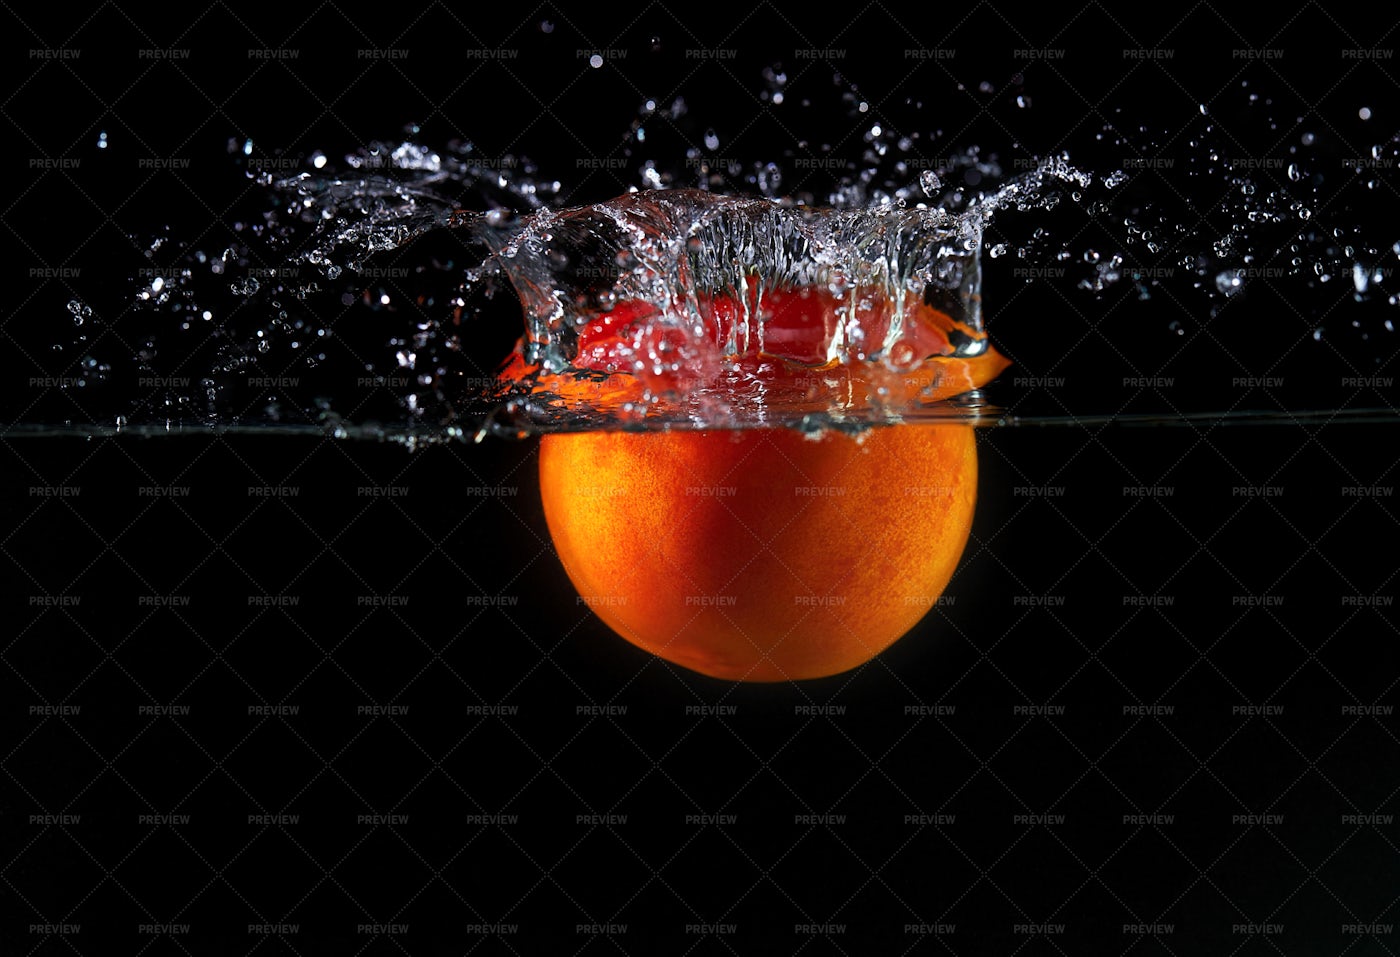 Falling Tomato Into Water: Stock Photos